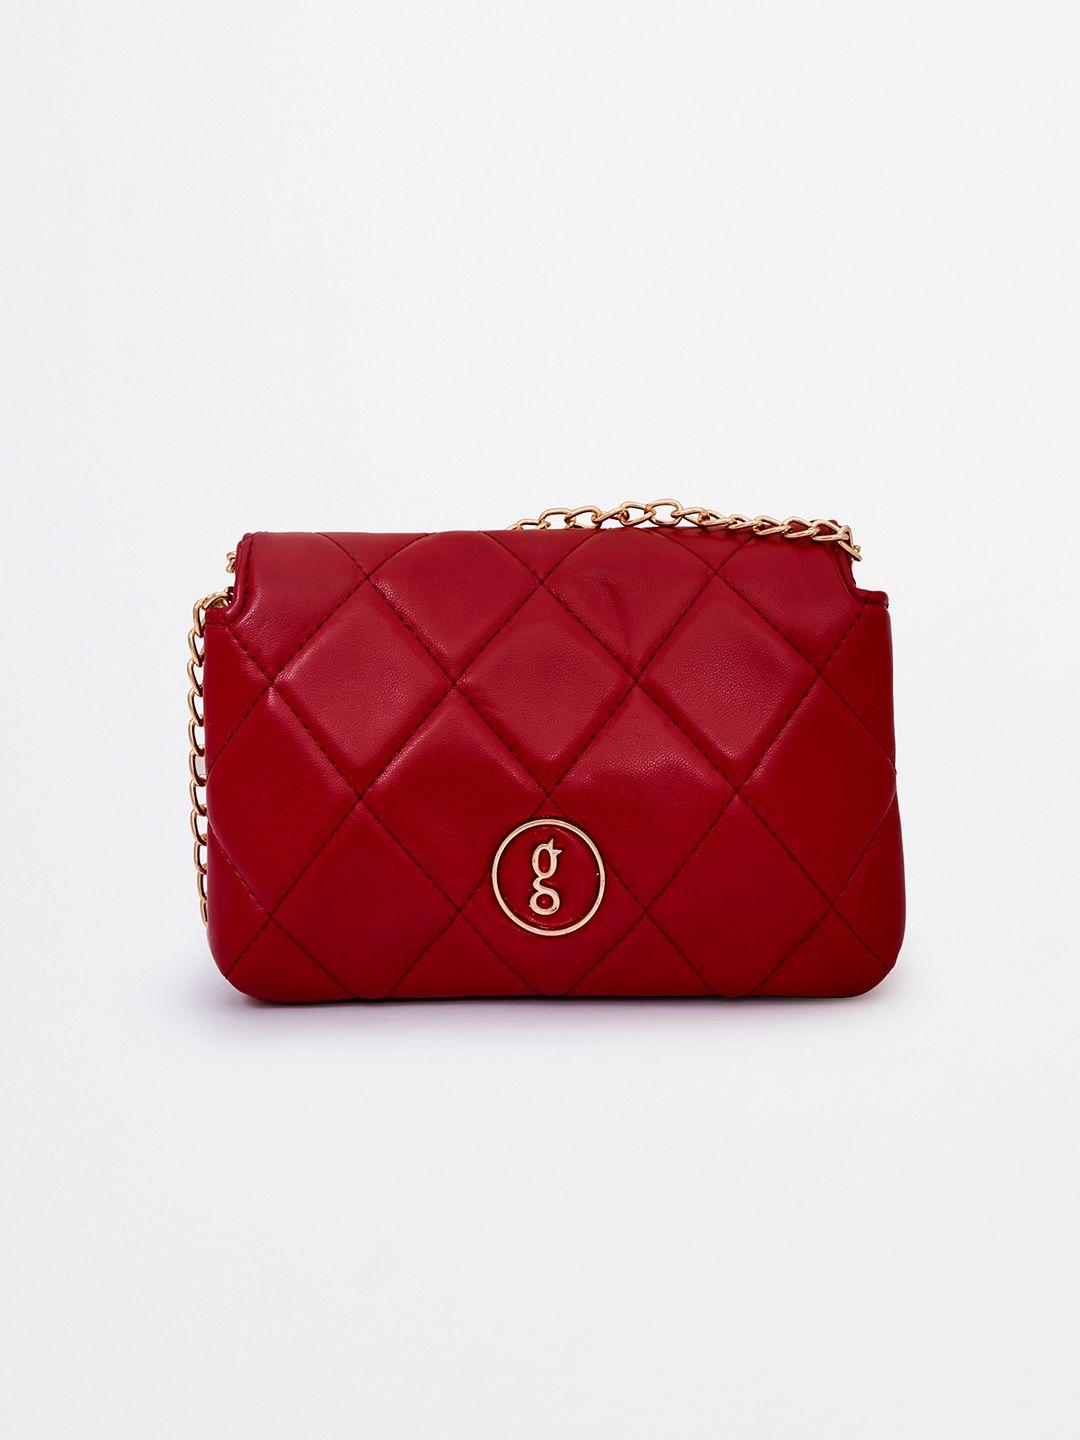 global desi red textured purse clutch